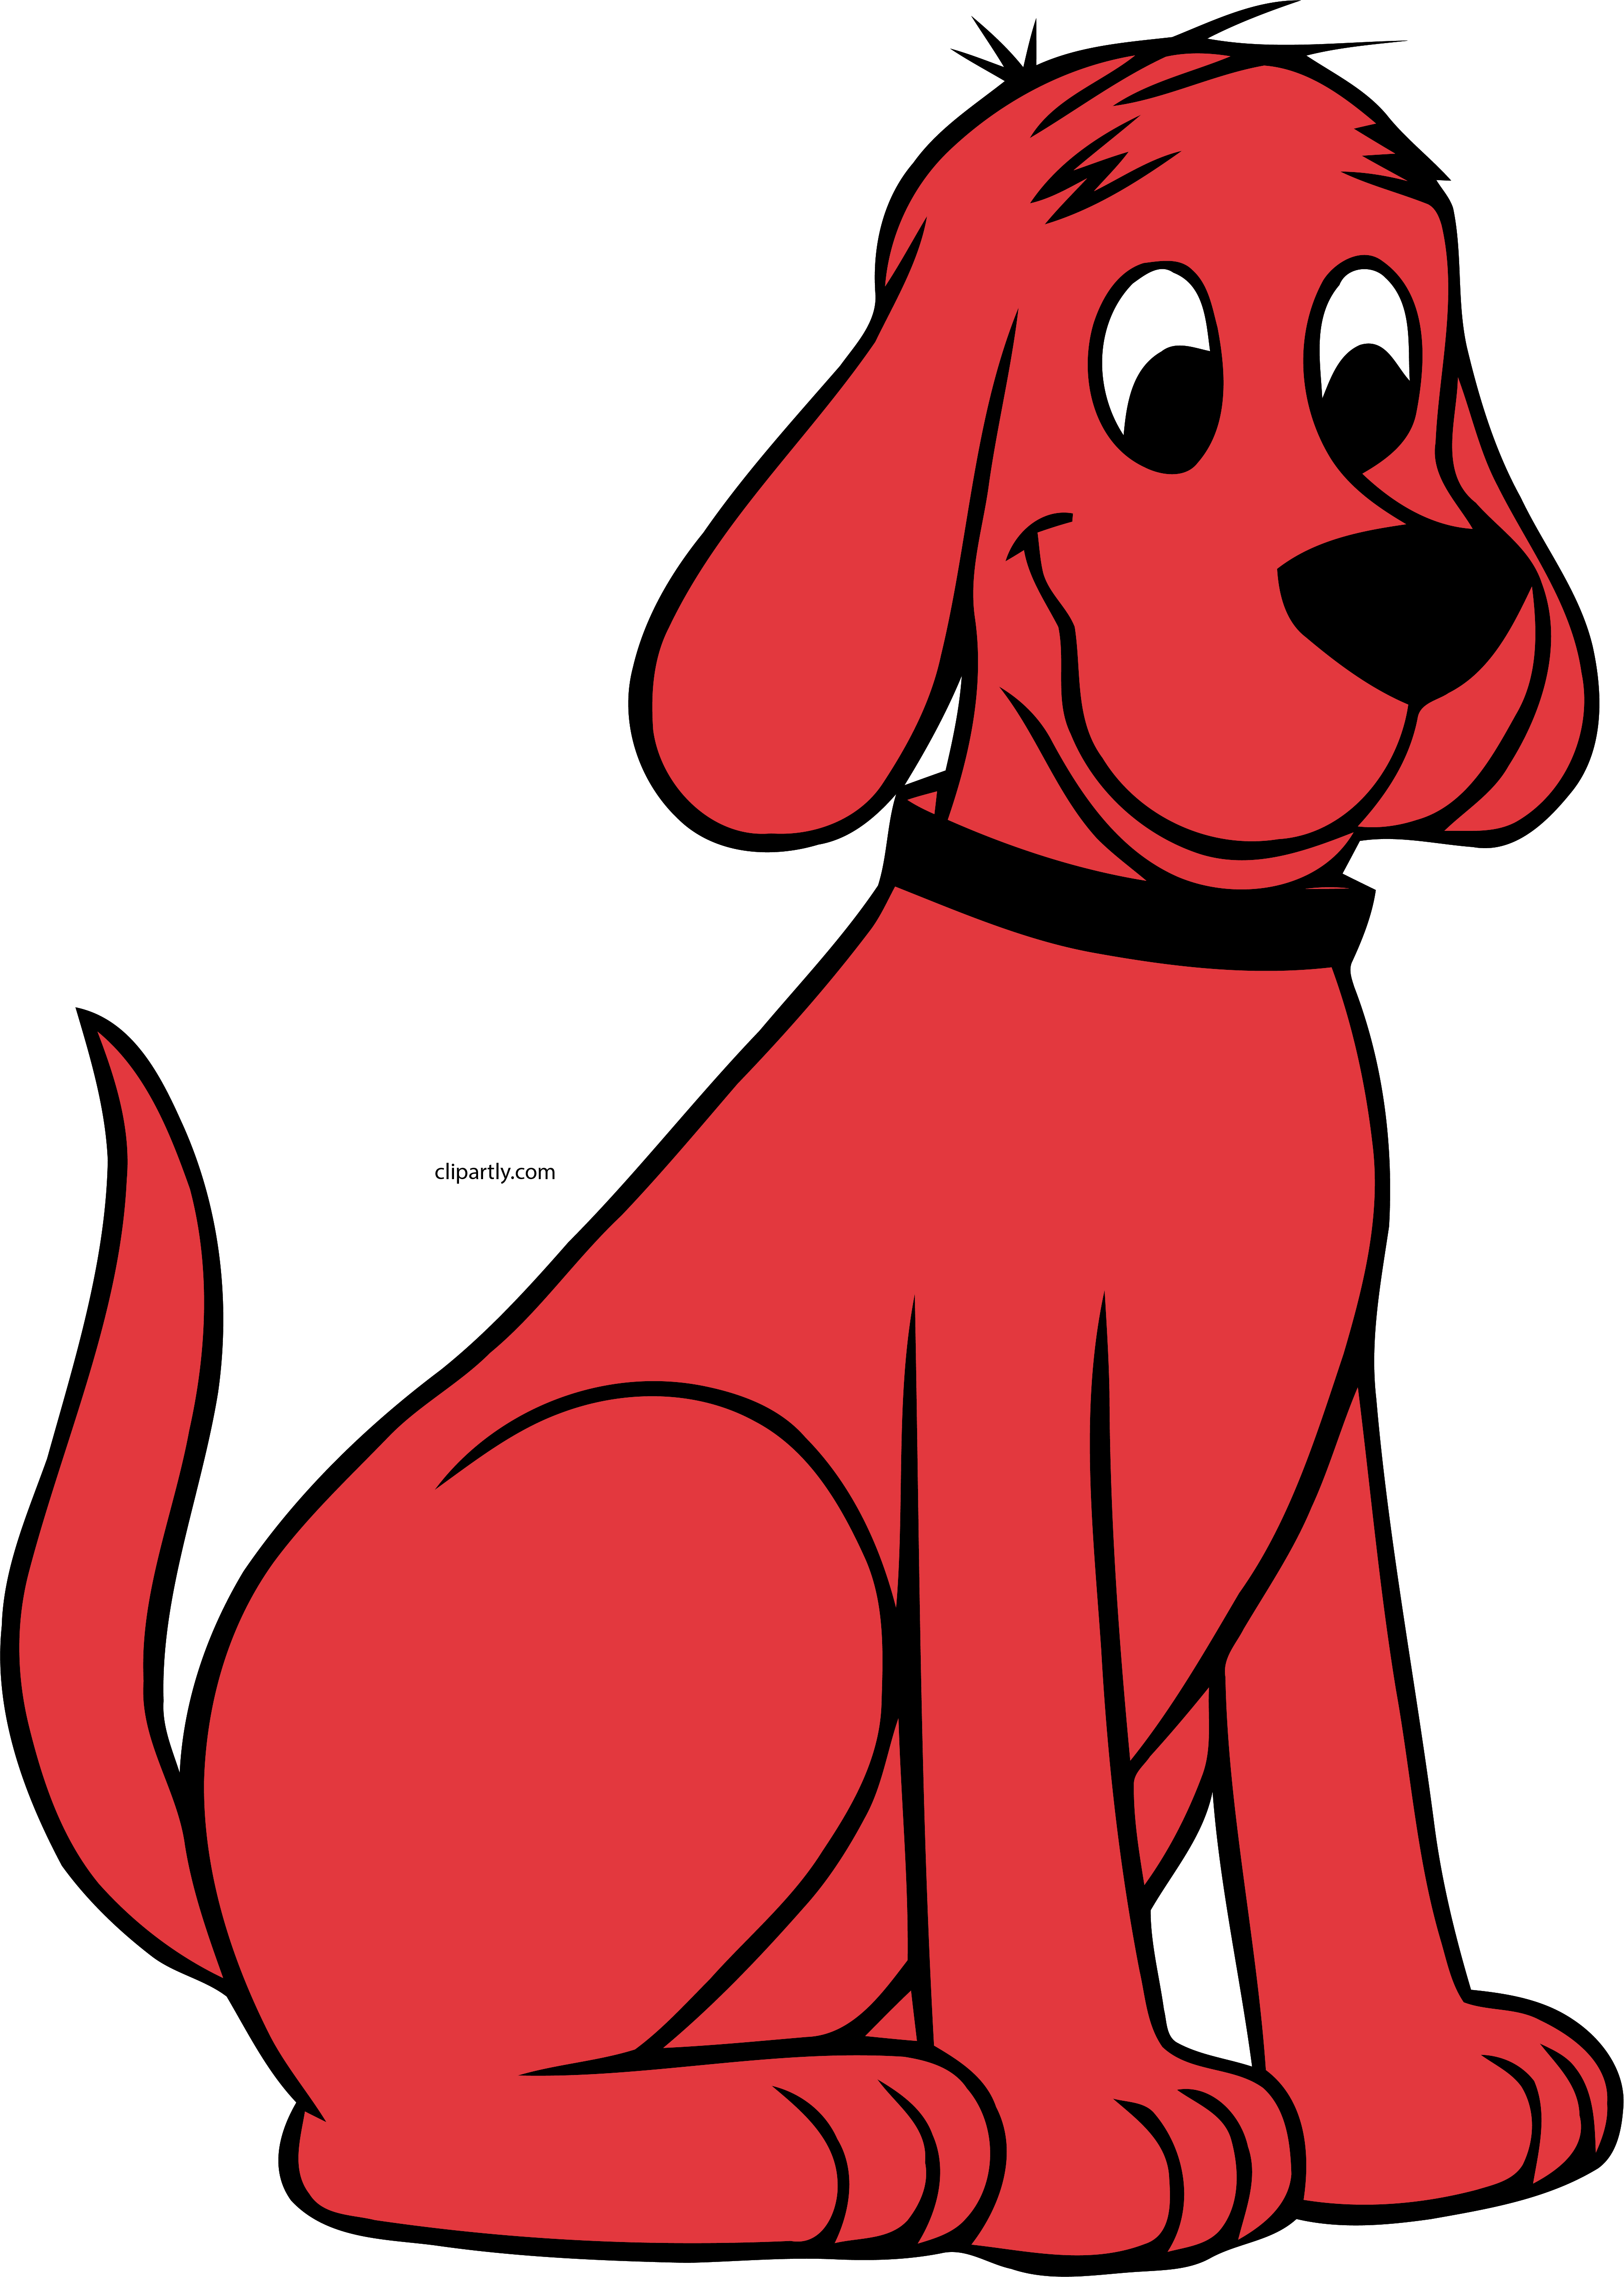 Clifford The Big Red Dog Cartoon